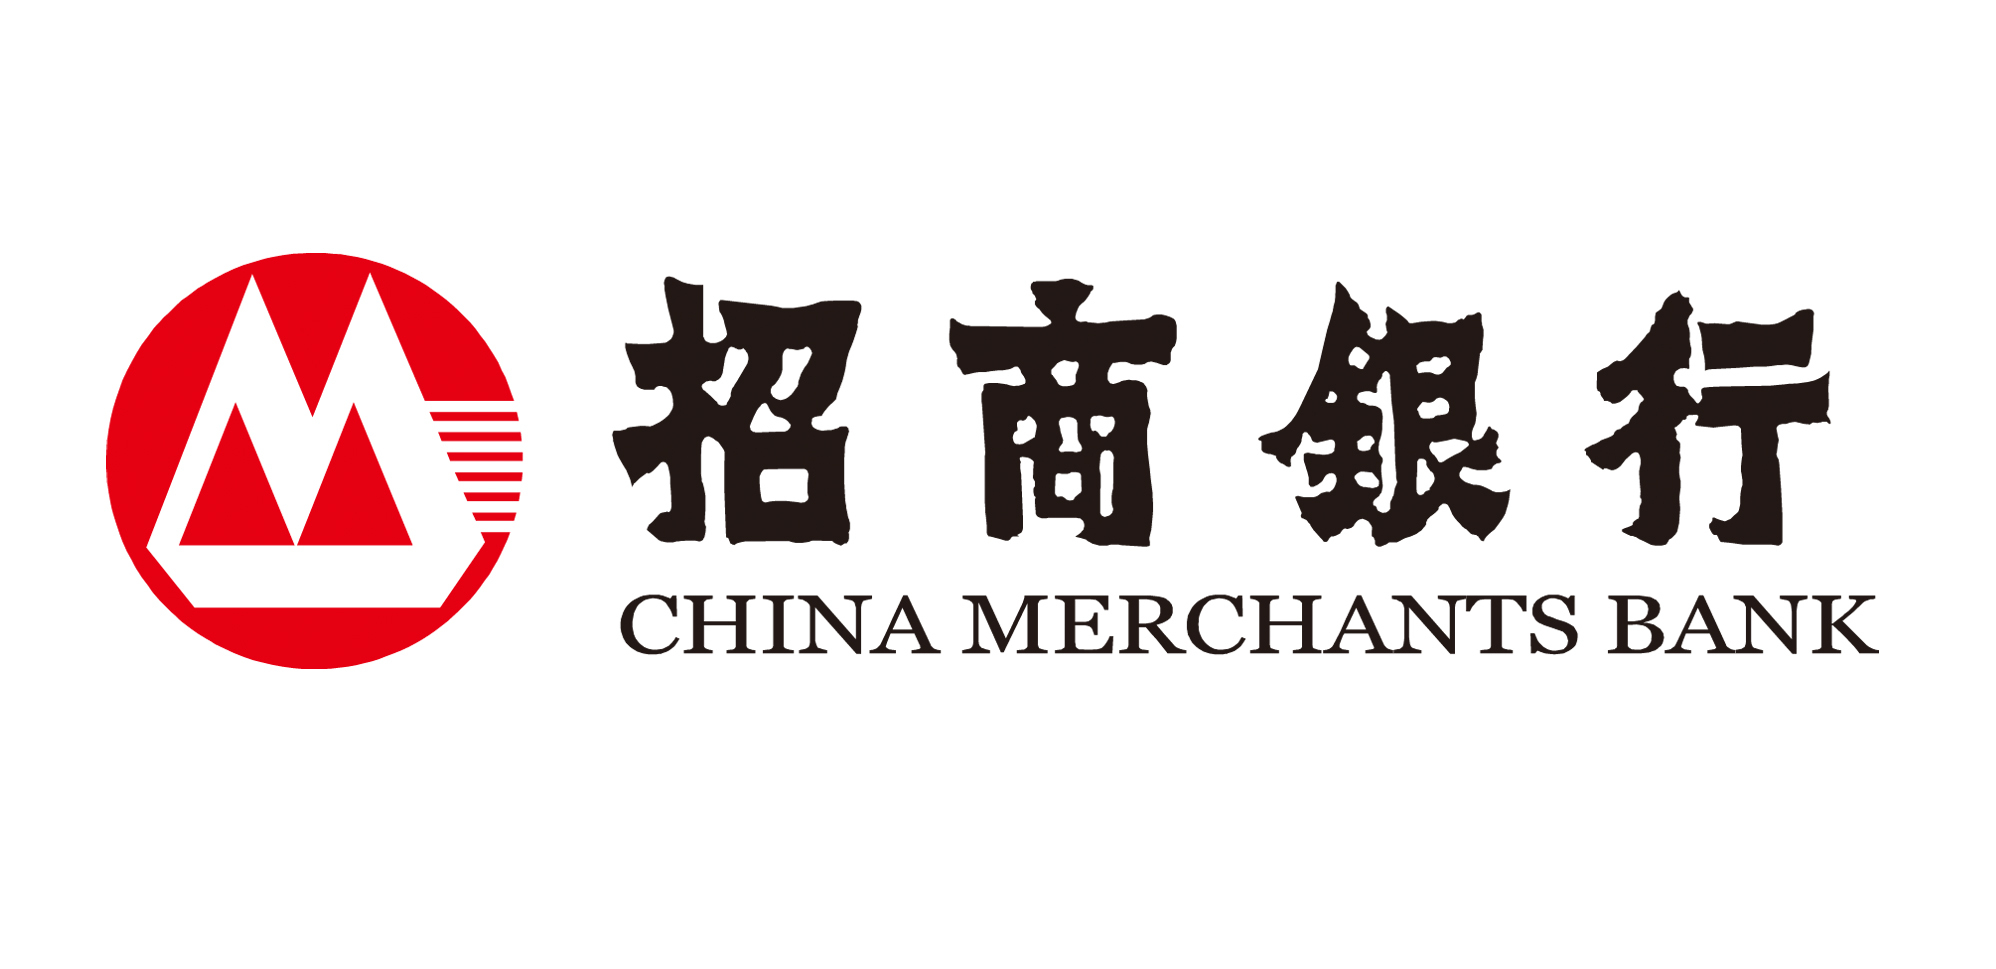 18-facts-about-china-merchants-bank